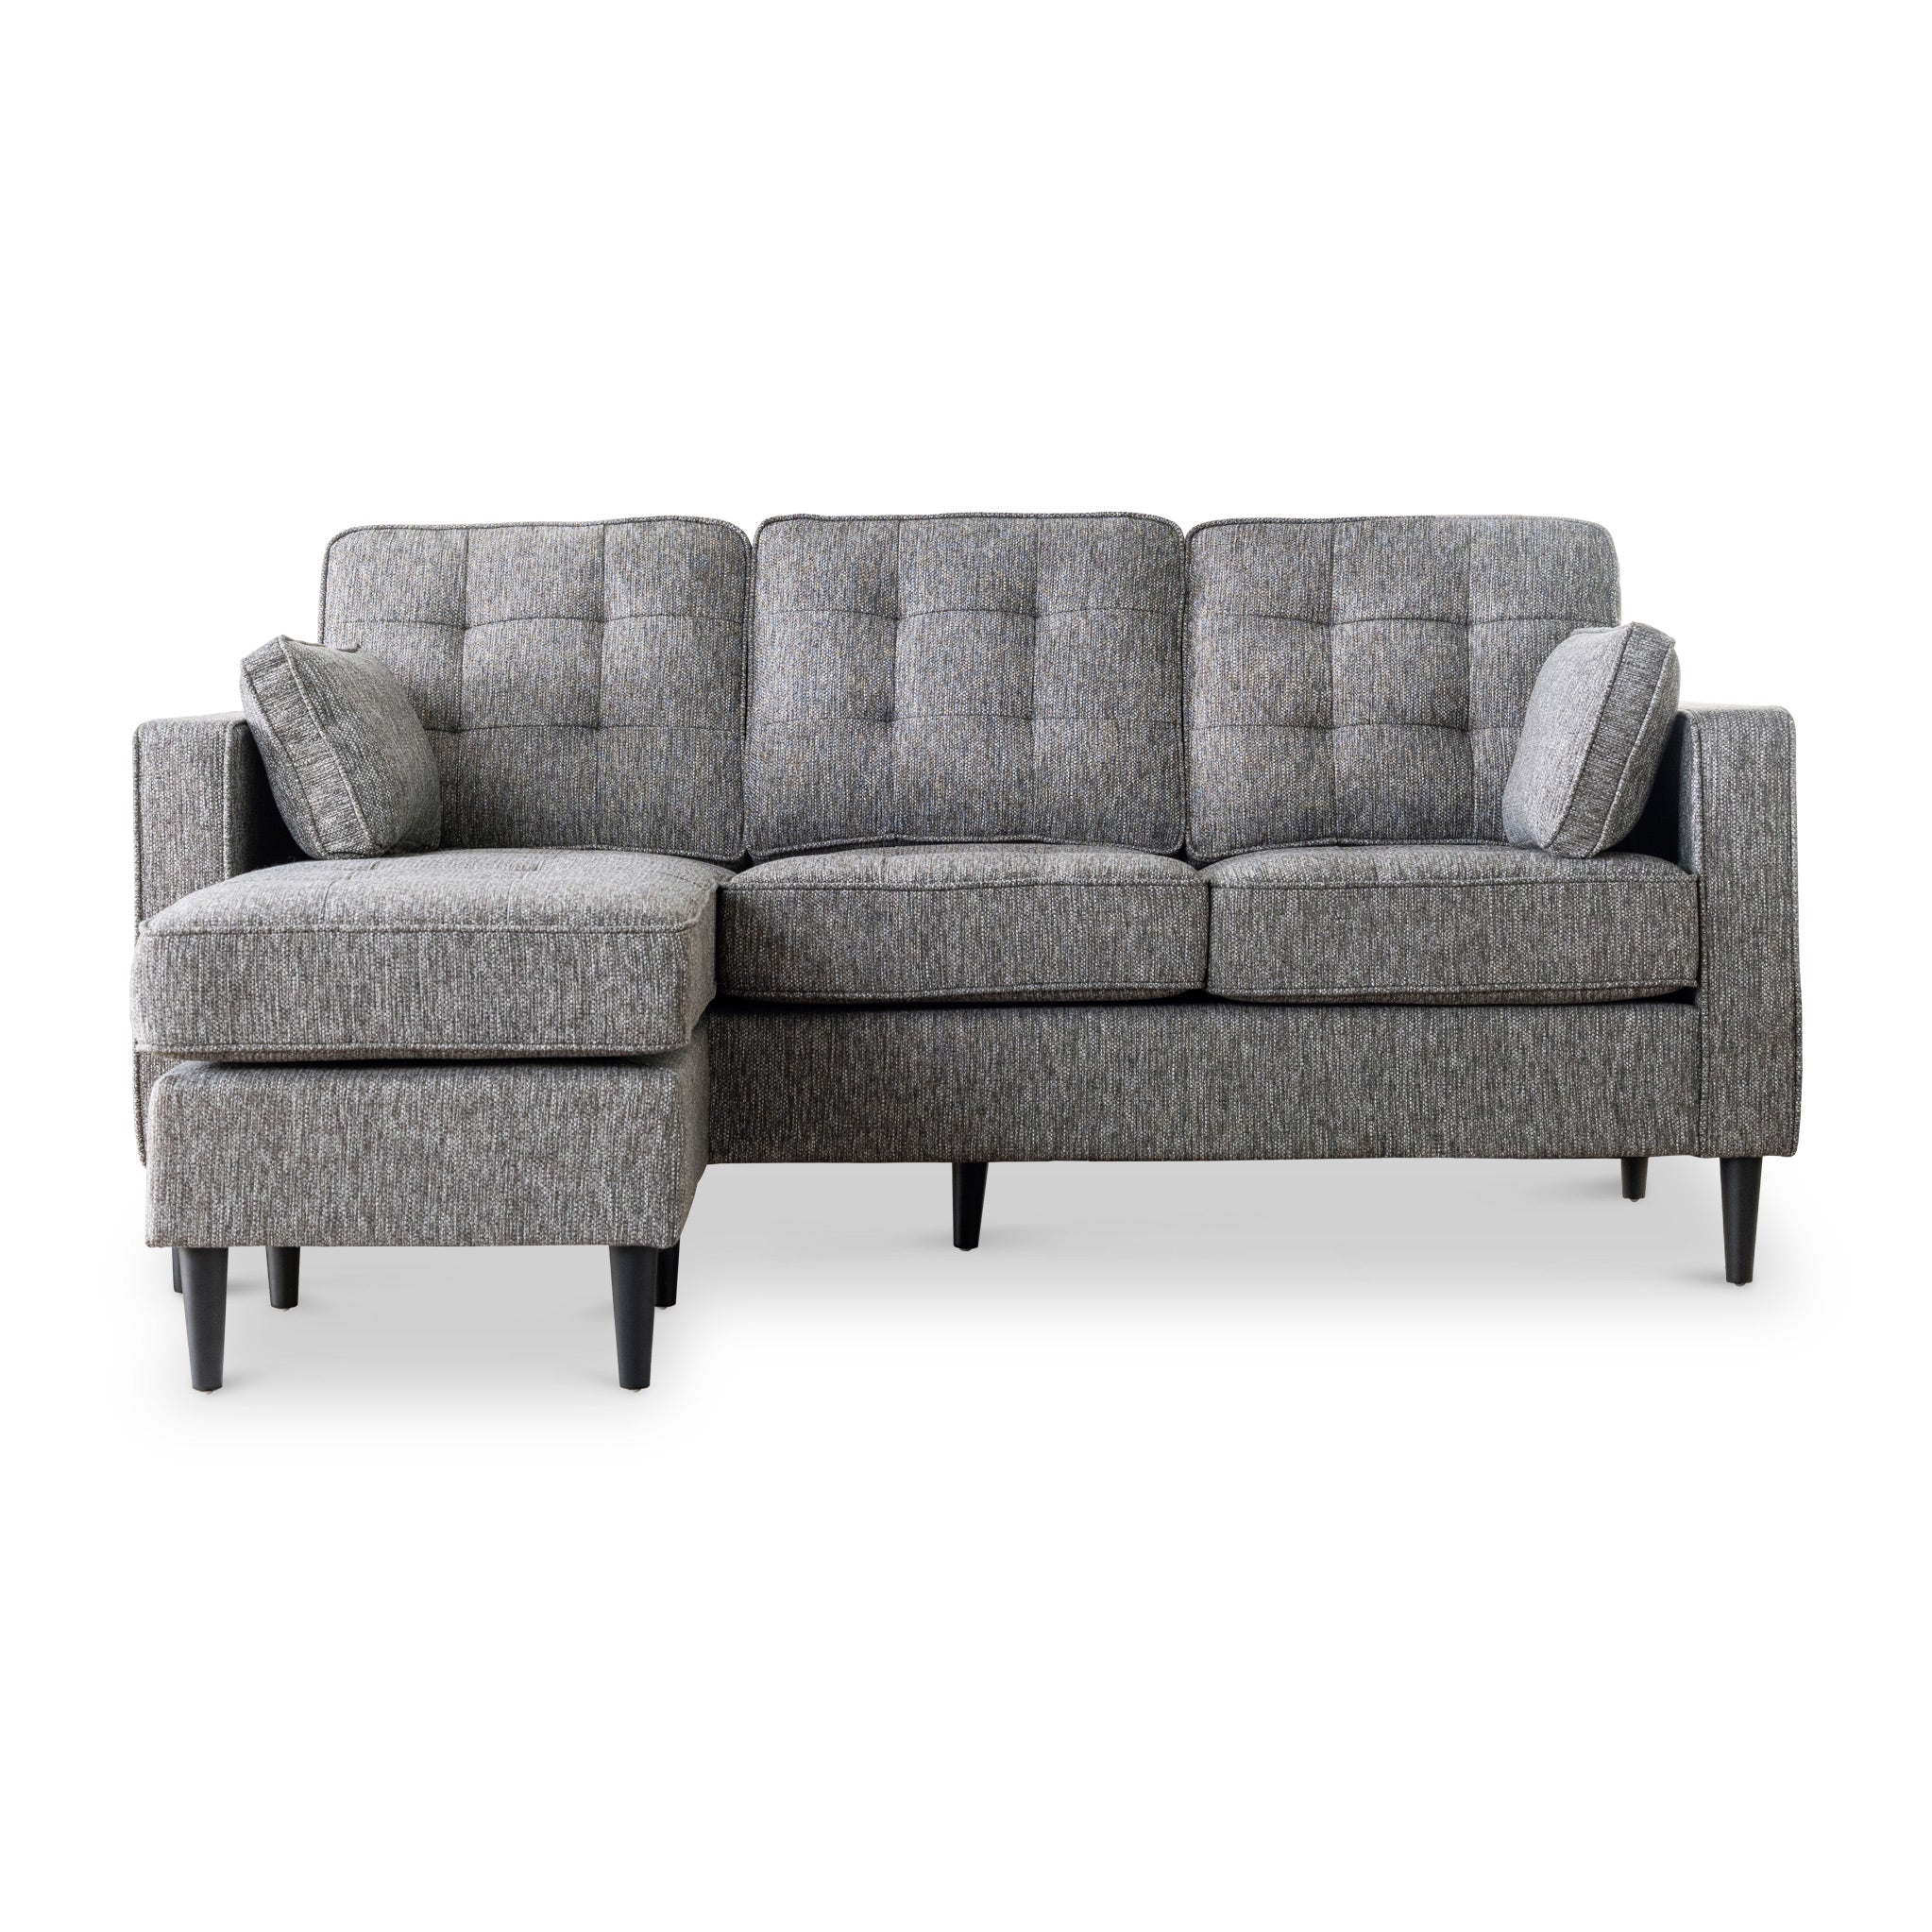 Blake Grey Slub Fabric 3 Seater Chaise Sofa For Living Room Roseland